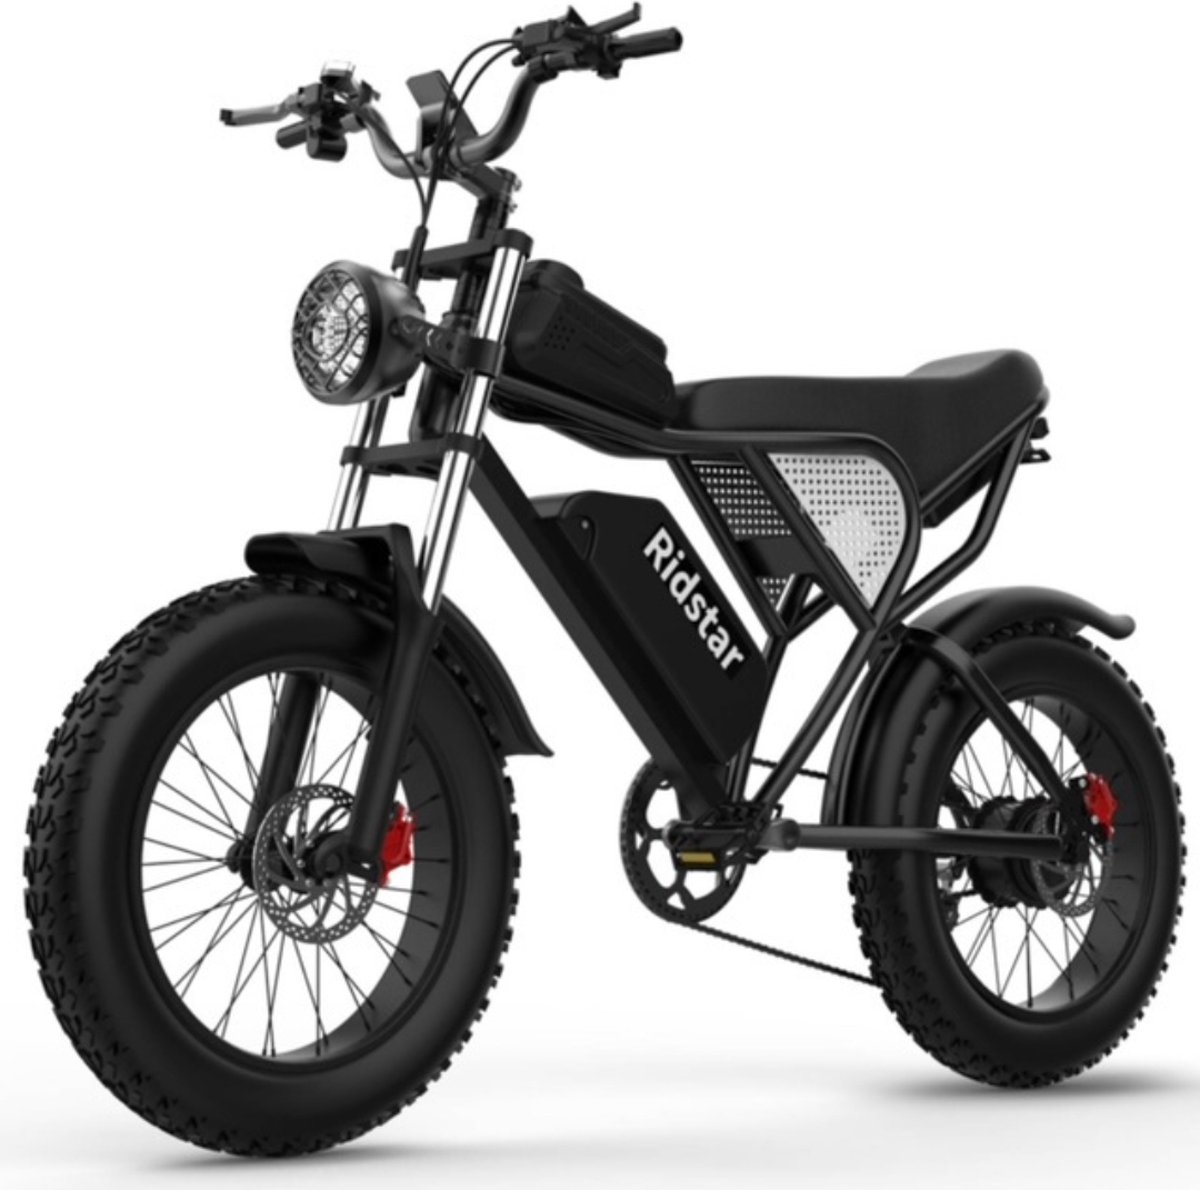 P4B - Ridstar - Fatbike - Elektrische Fatbike - Elektrische Fiets - Elektrische Mountainbike - E bike - Zwart - 1 jaar garantie - Legaal openbare weg